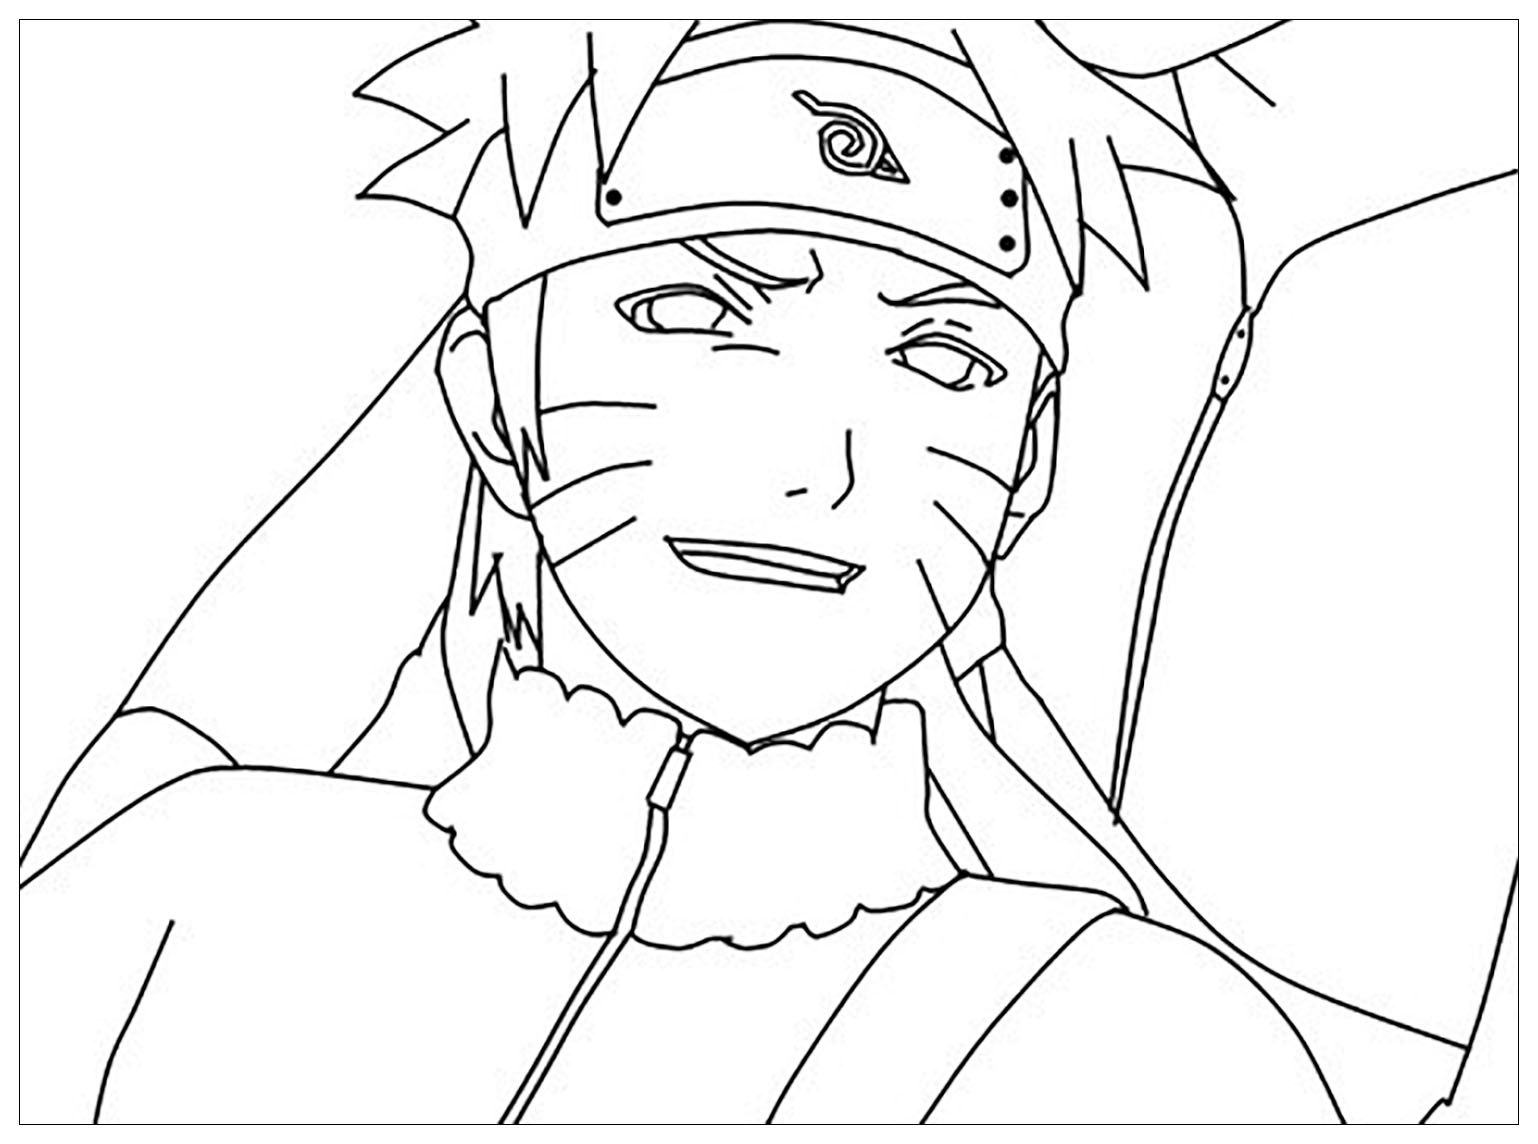 Naruto sorri para si!